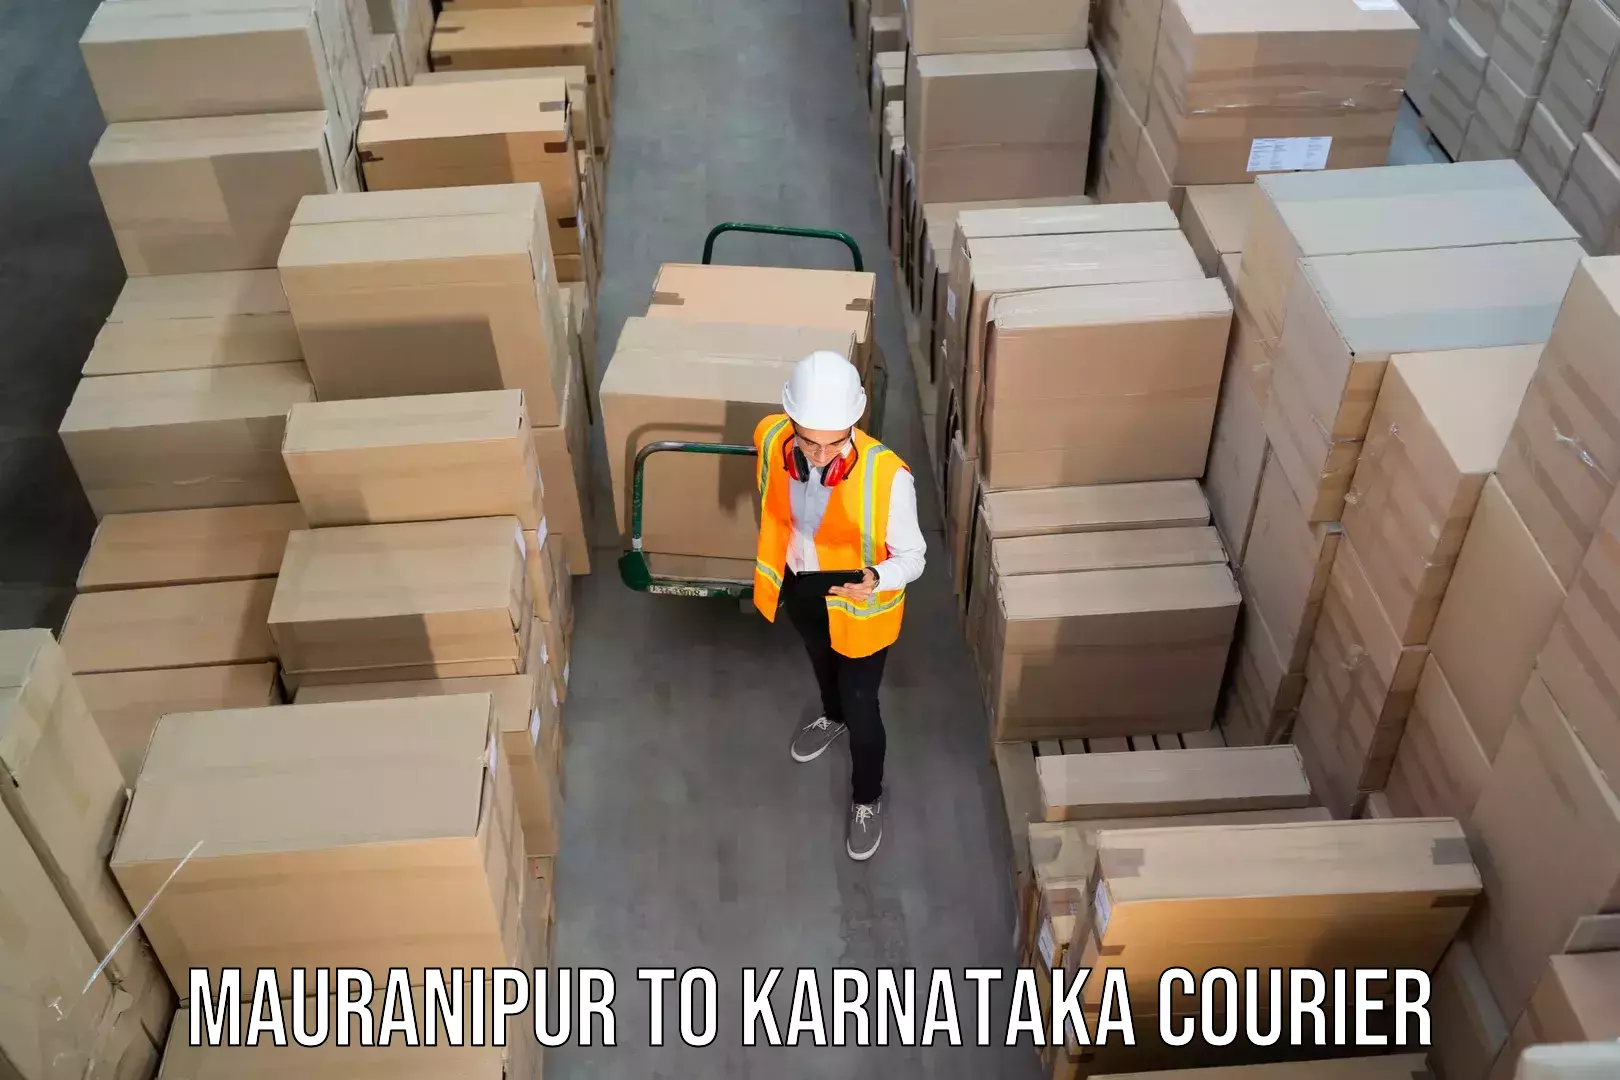 Courier service comparison Mauranipur to Rona Gadag